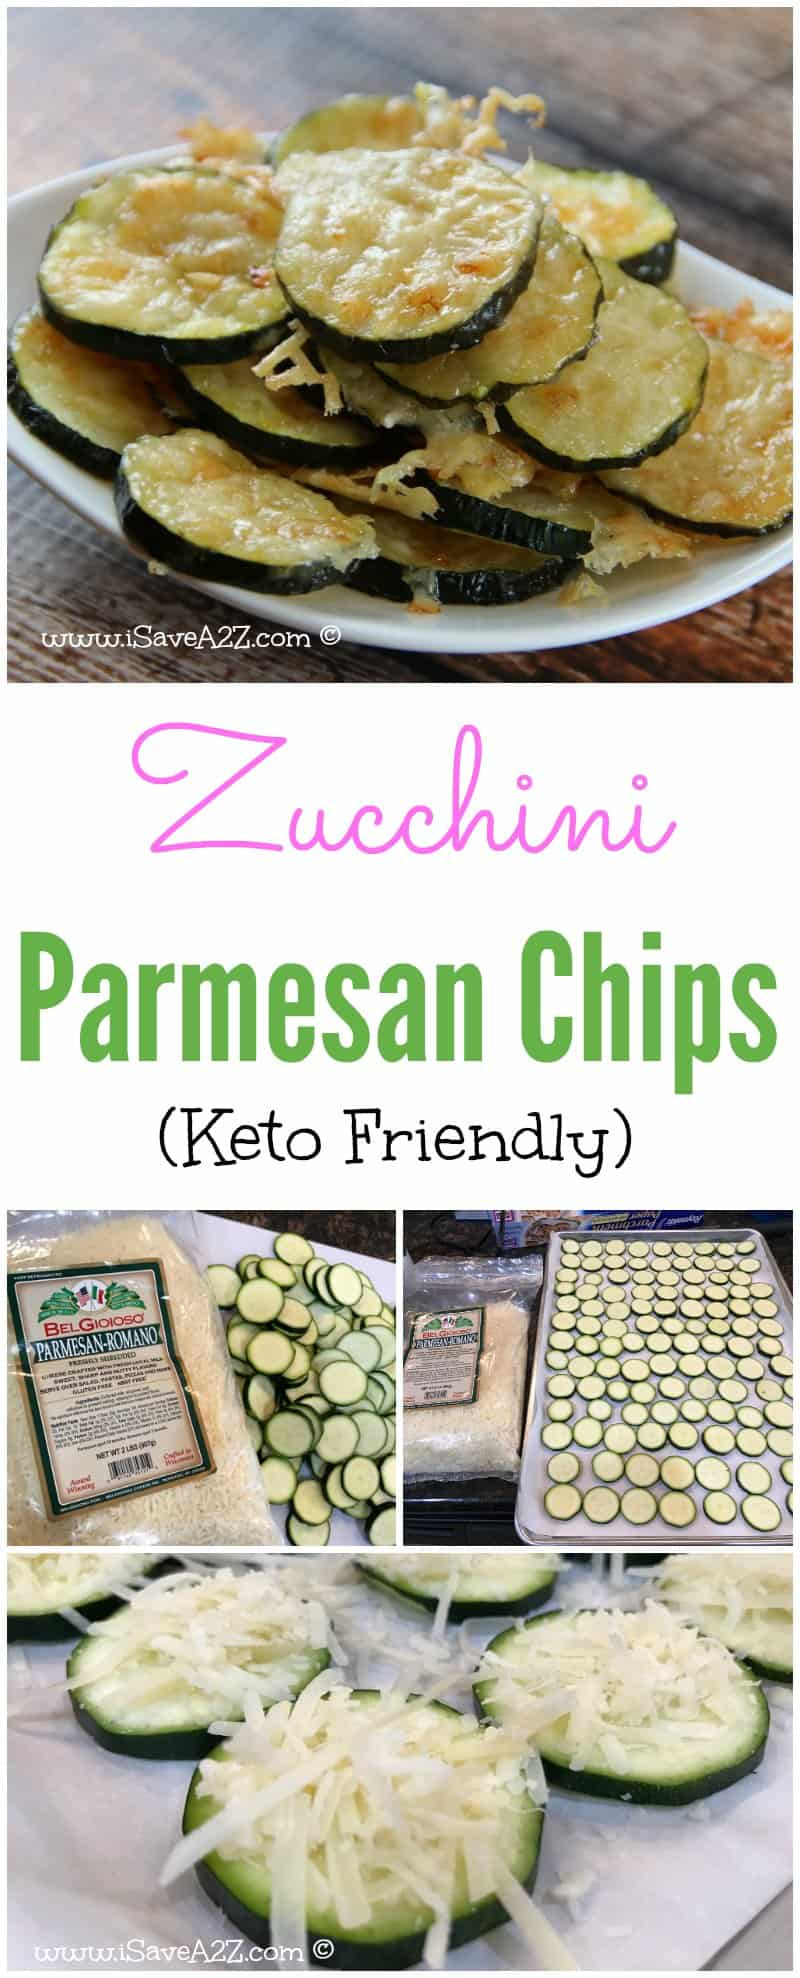 Zucchini Keto Recipes Low Carb
 Low Carb Zucchini Parmesan Chips Keto Friendly Recipe